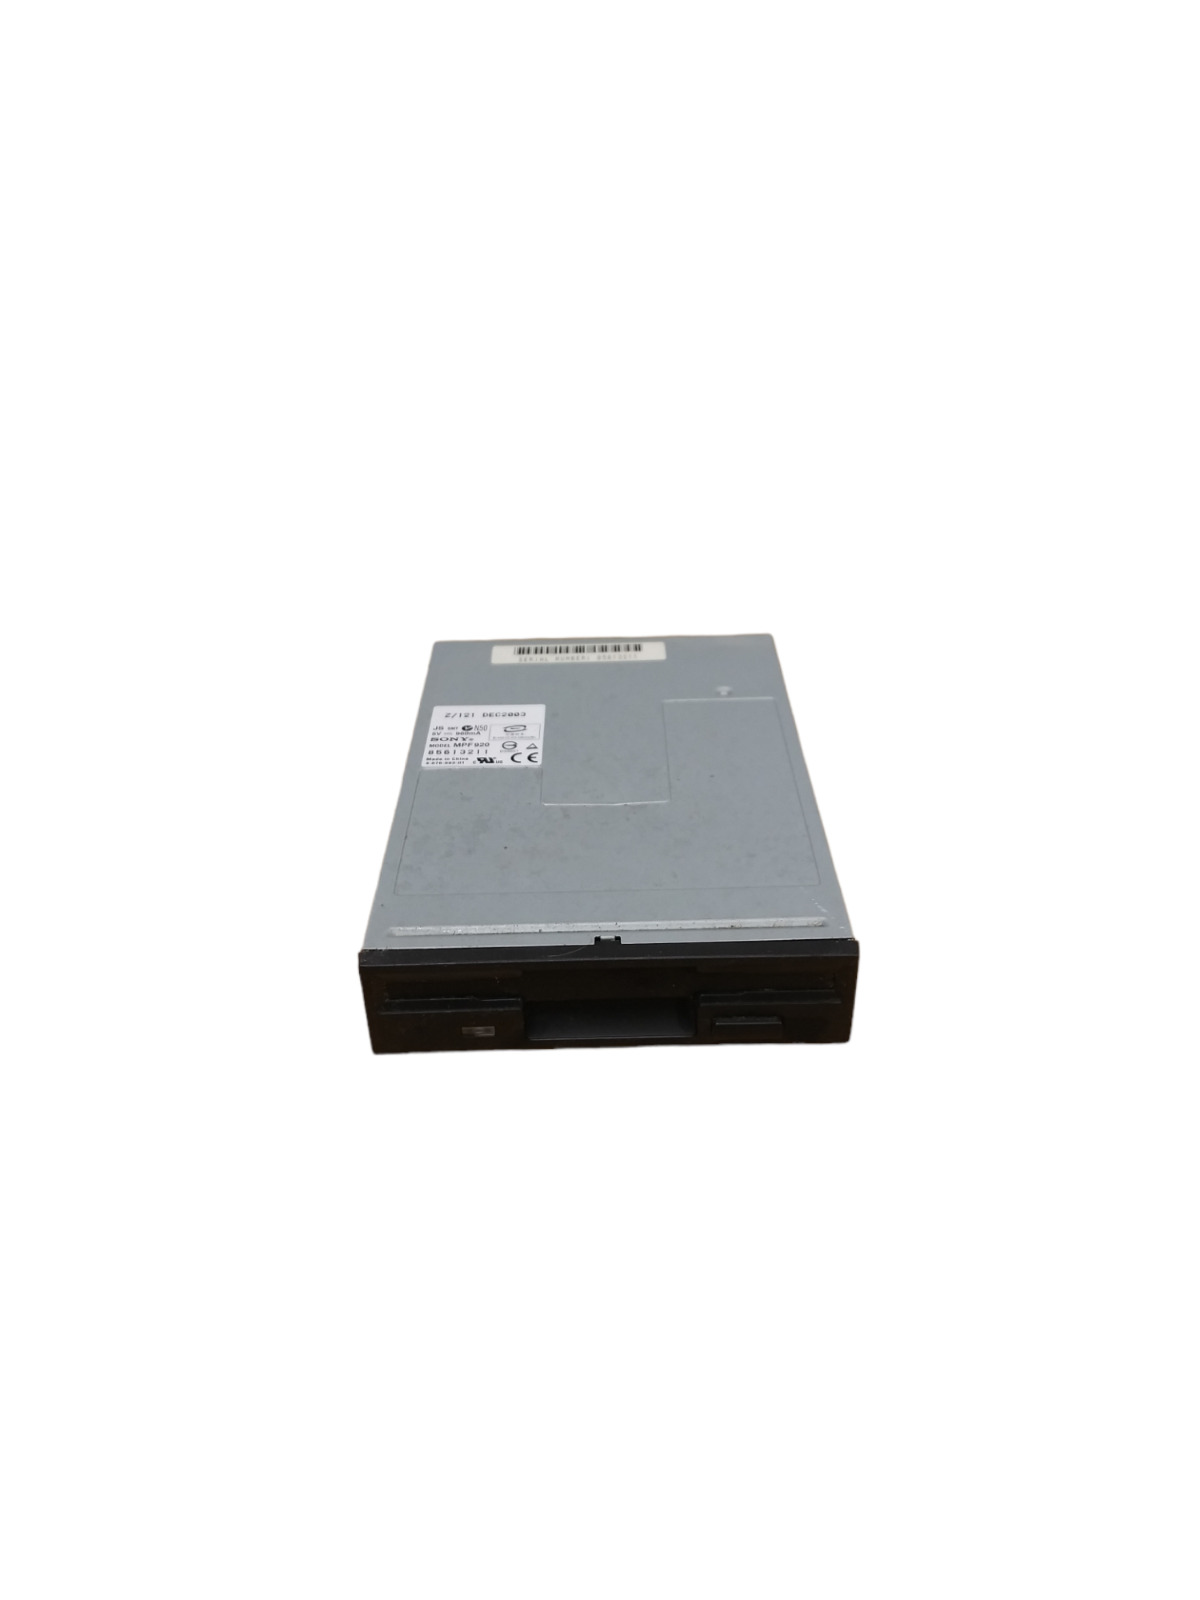 Vintage Sony MPF920 UH650 1.44 MB 3.5 inch Internal Black Floppy Drive